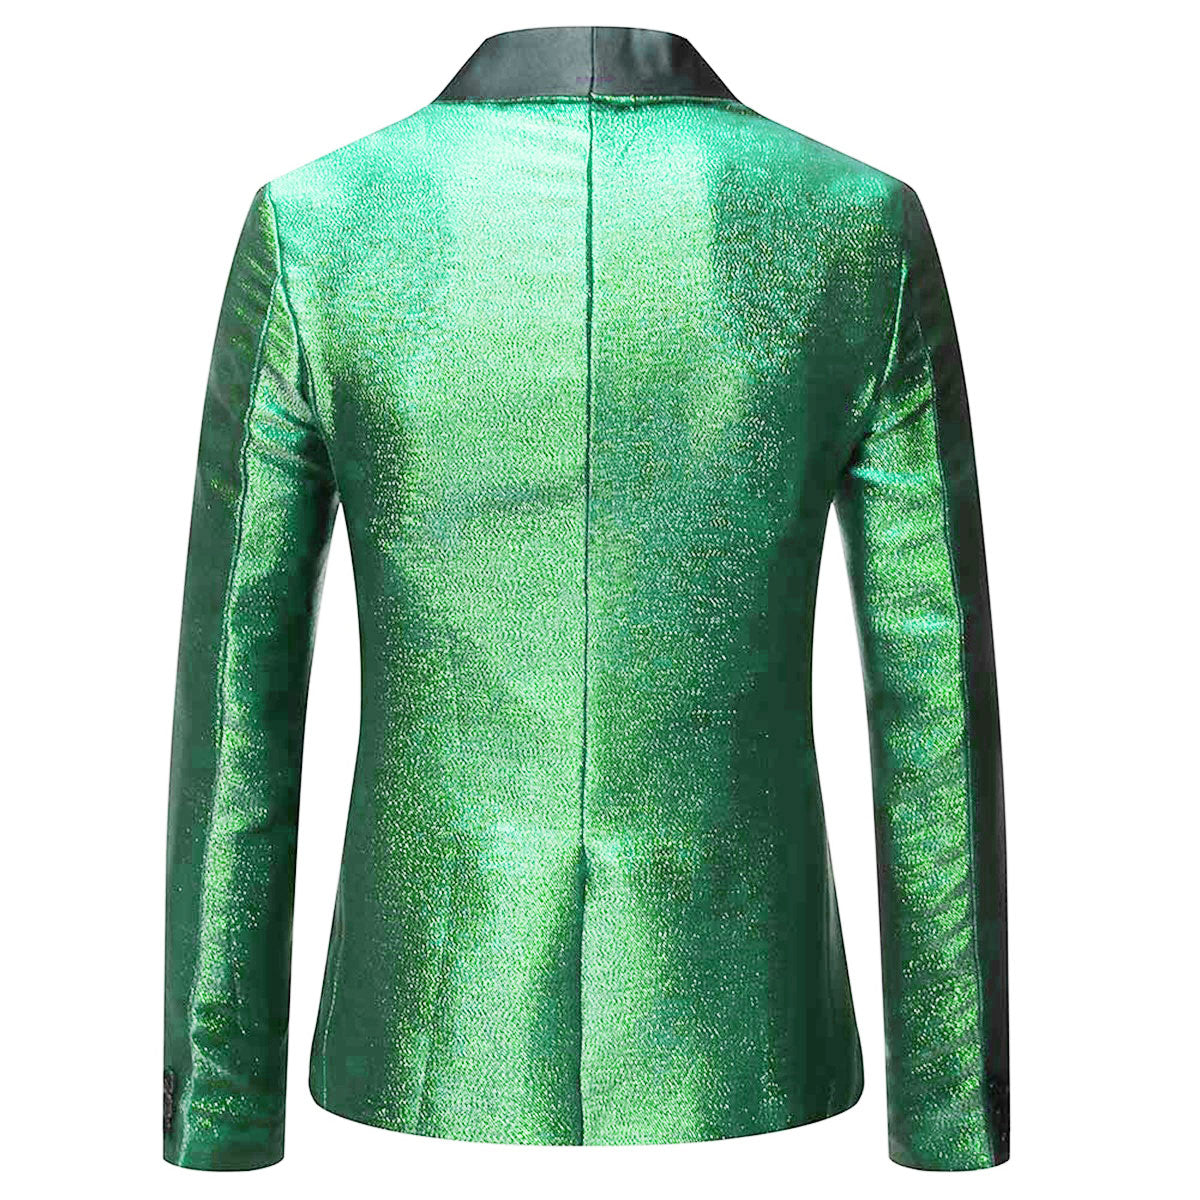 Magic Tuxedo Jacket Luxury Prom Blazer Green/Blue